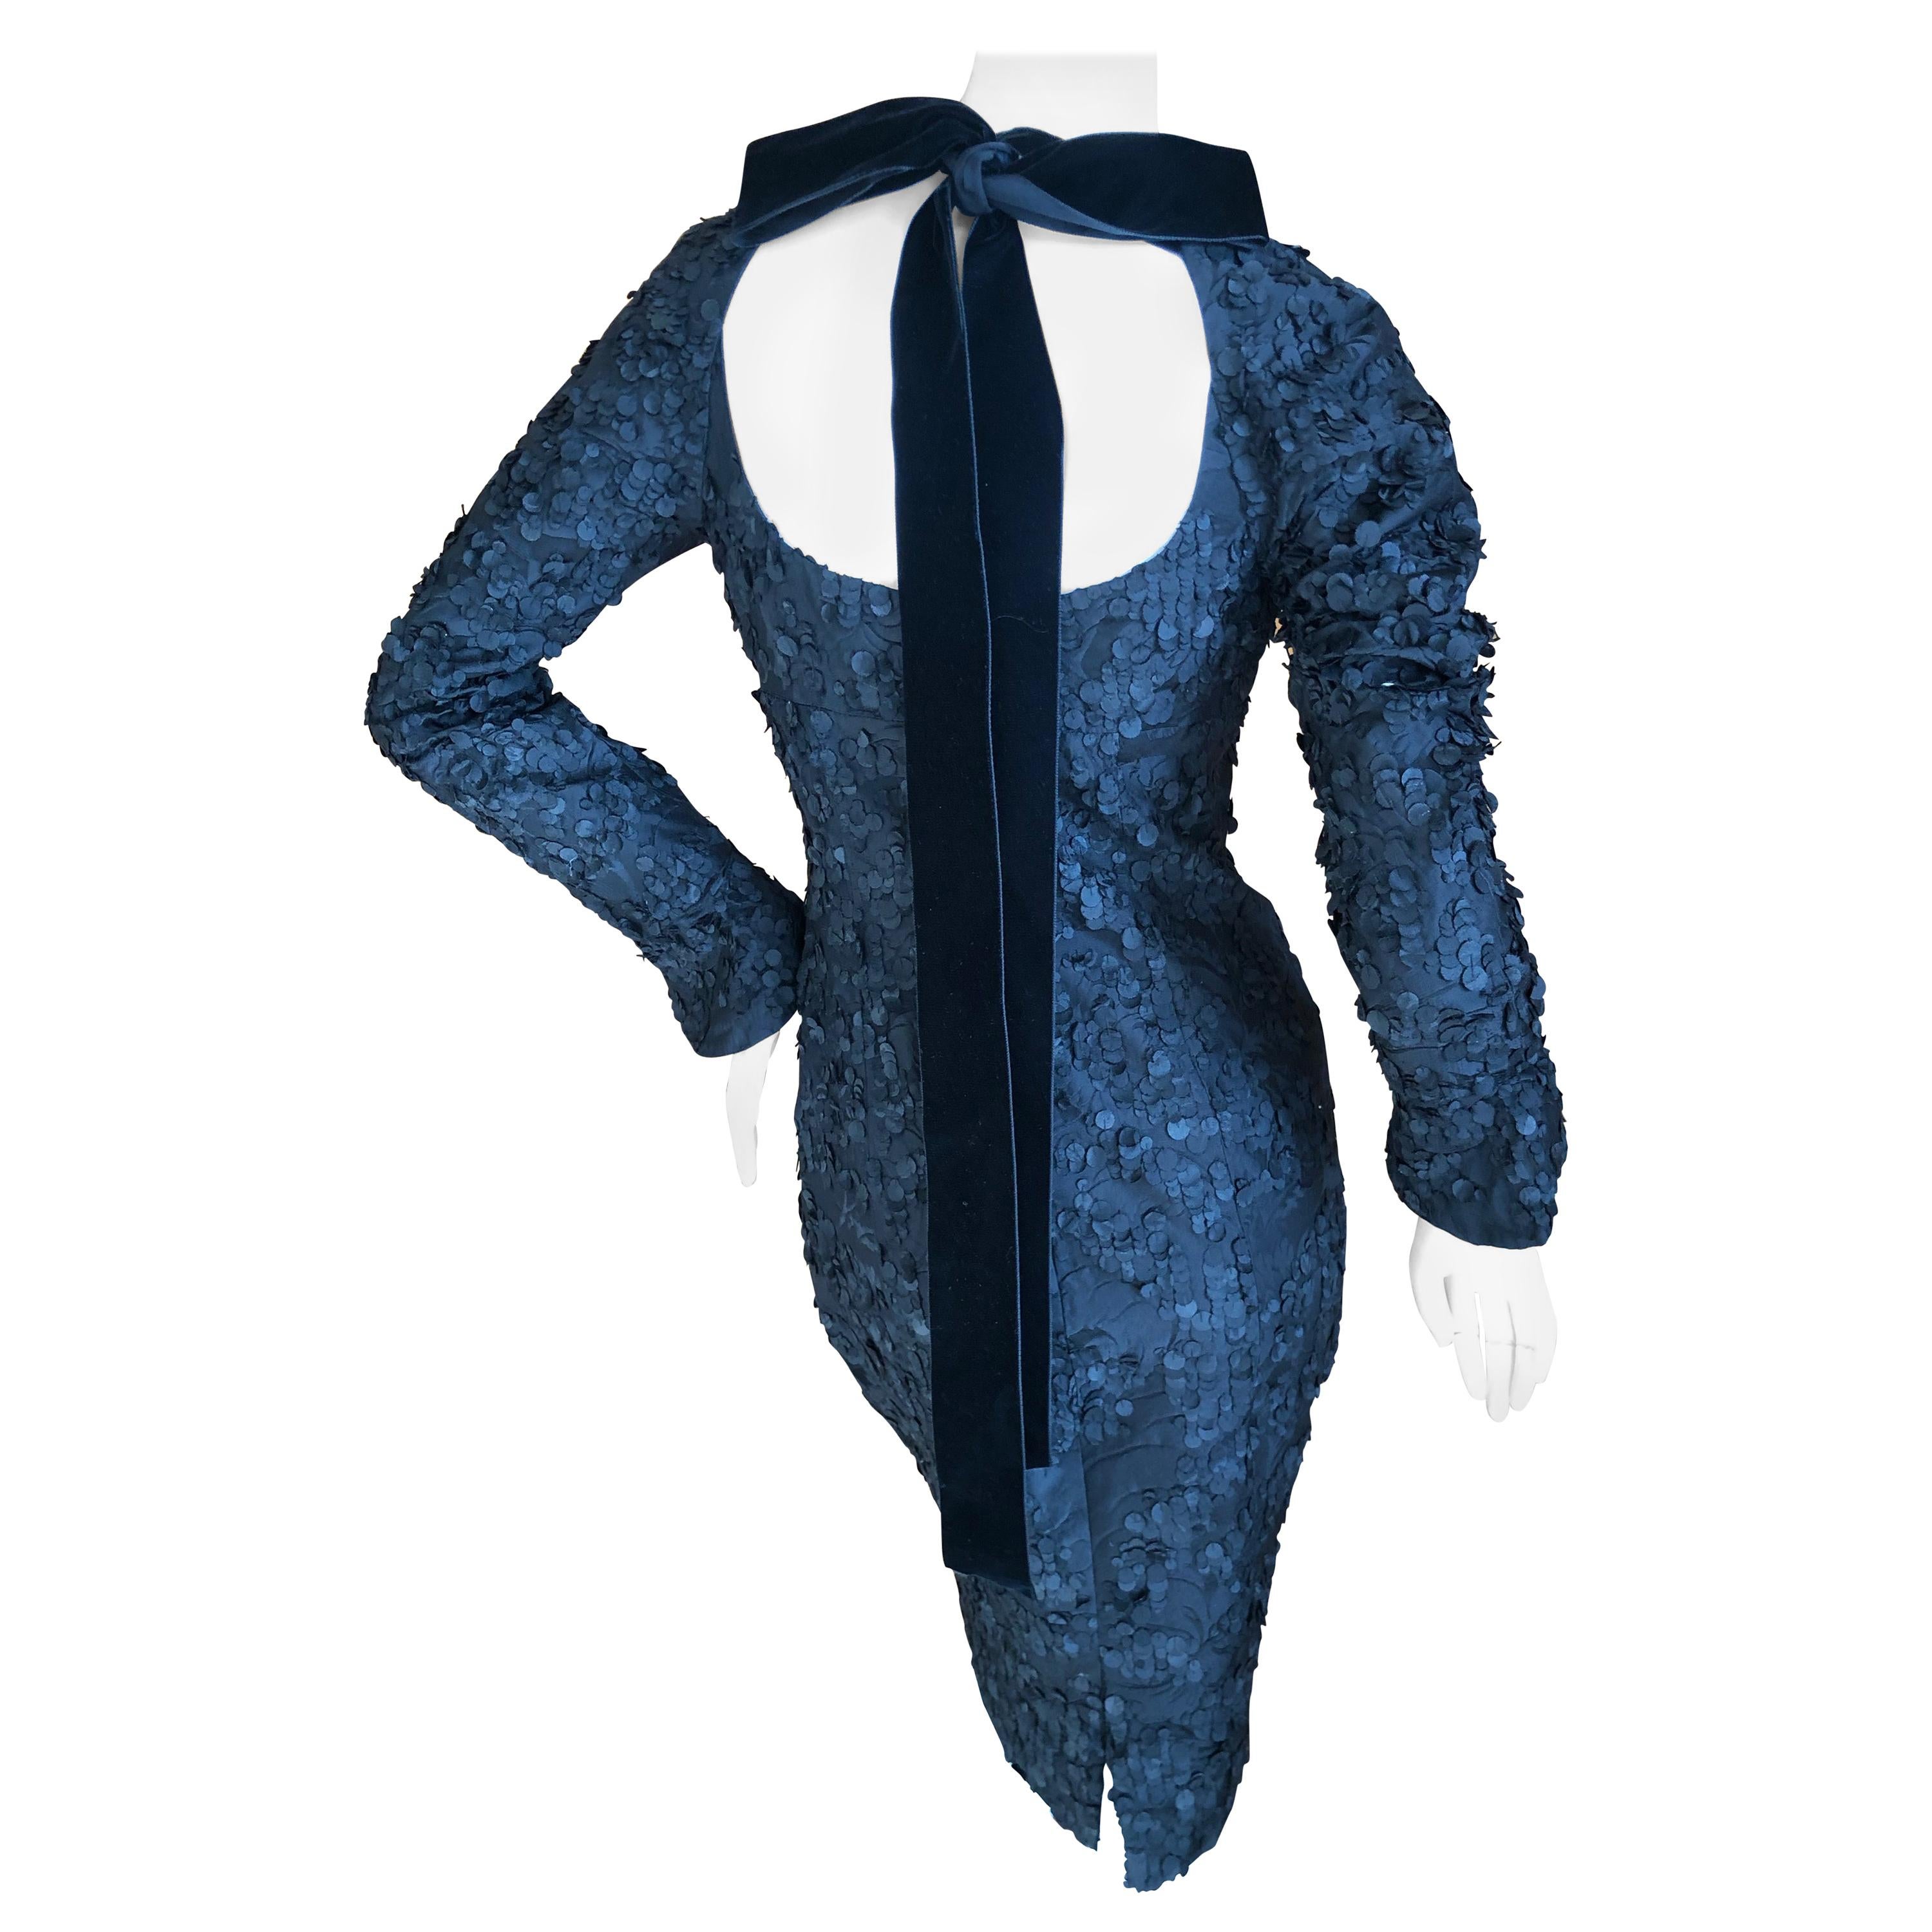 Tom Ford for Yves Saint Laurent Backless "Sequin" LBD with Velvet Tie For Sale